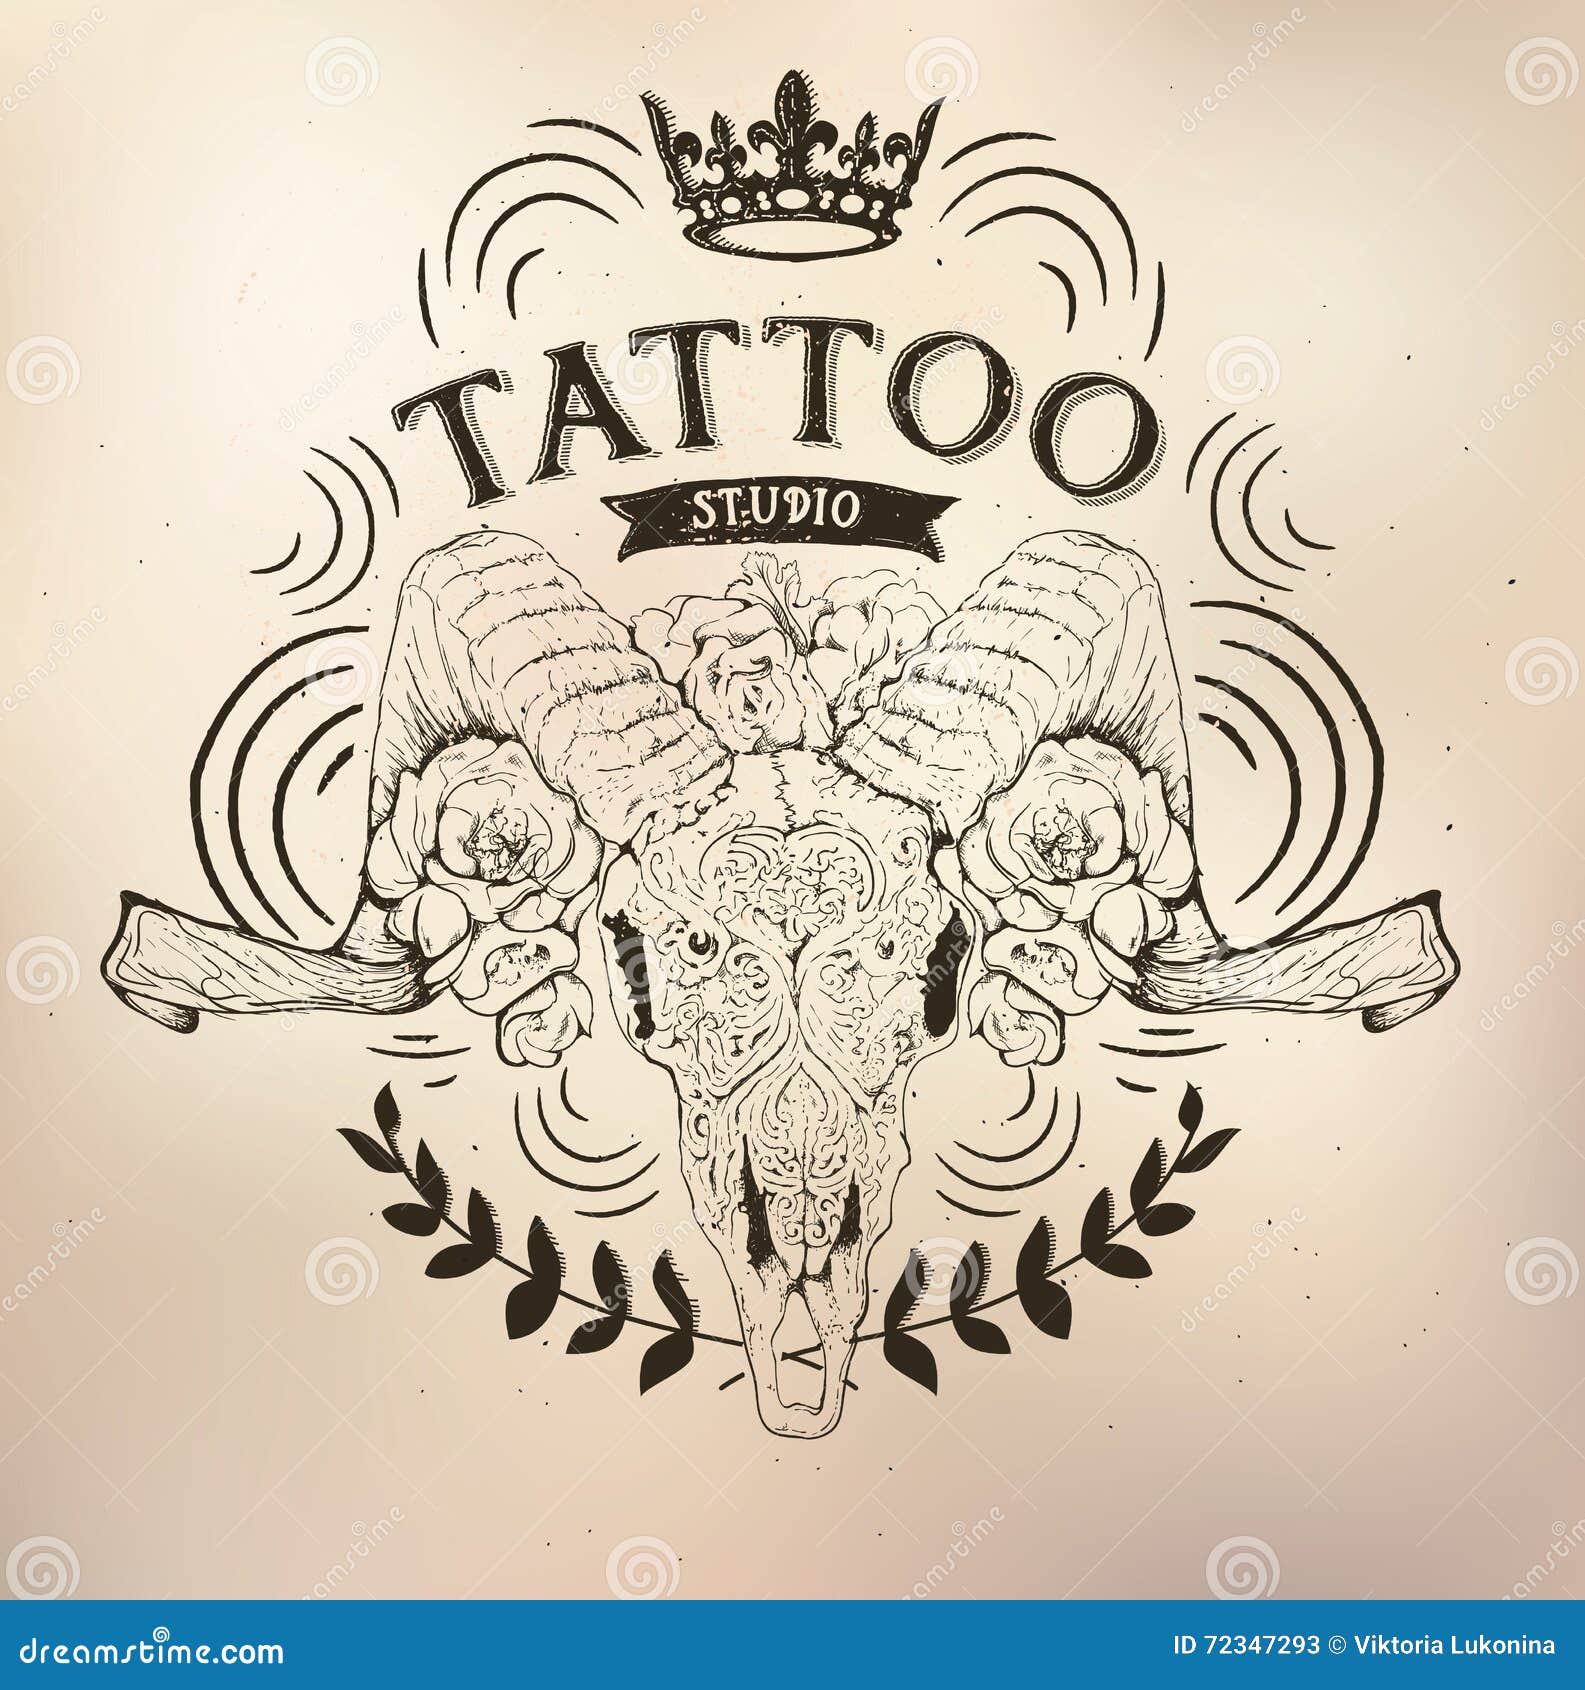 Tattoo Old School Studio Skull Ram Stock Vector - Illustration of death,  decoration: 72347293